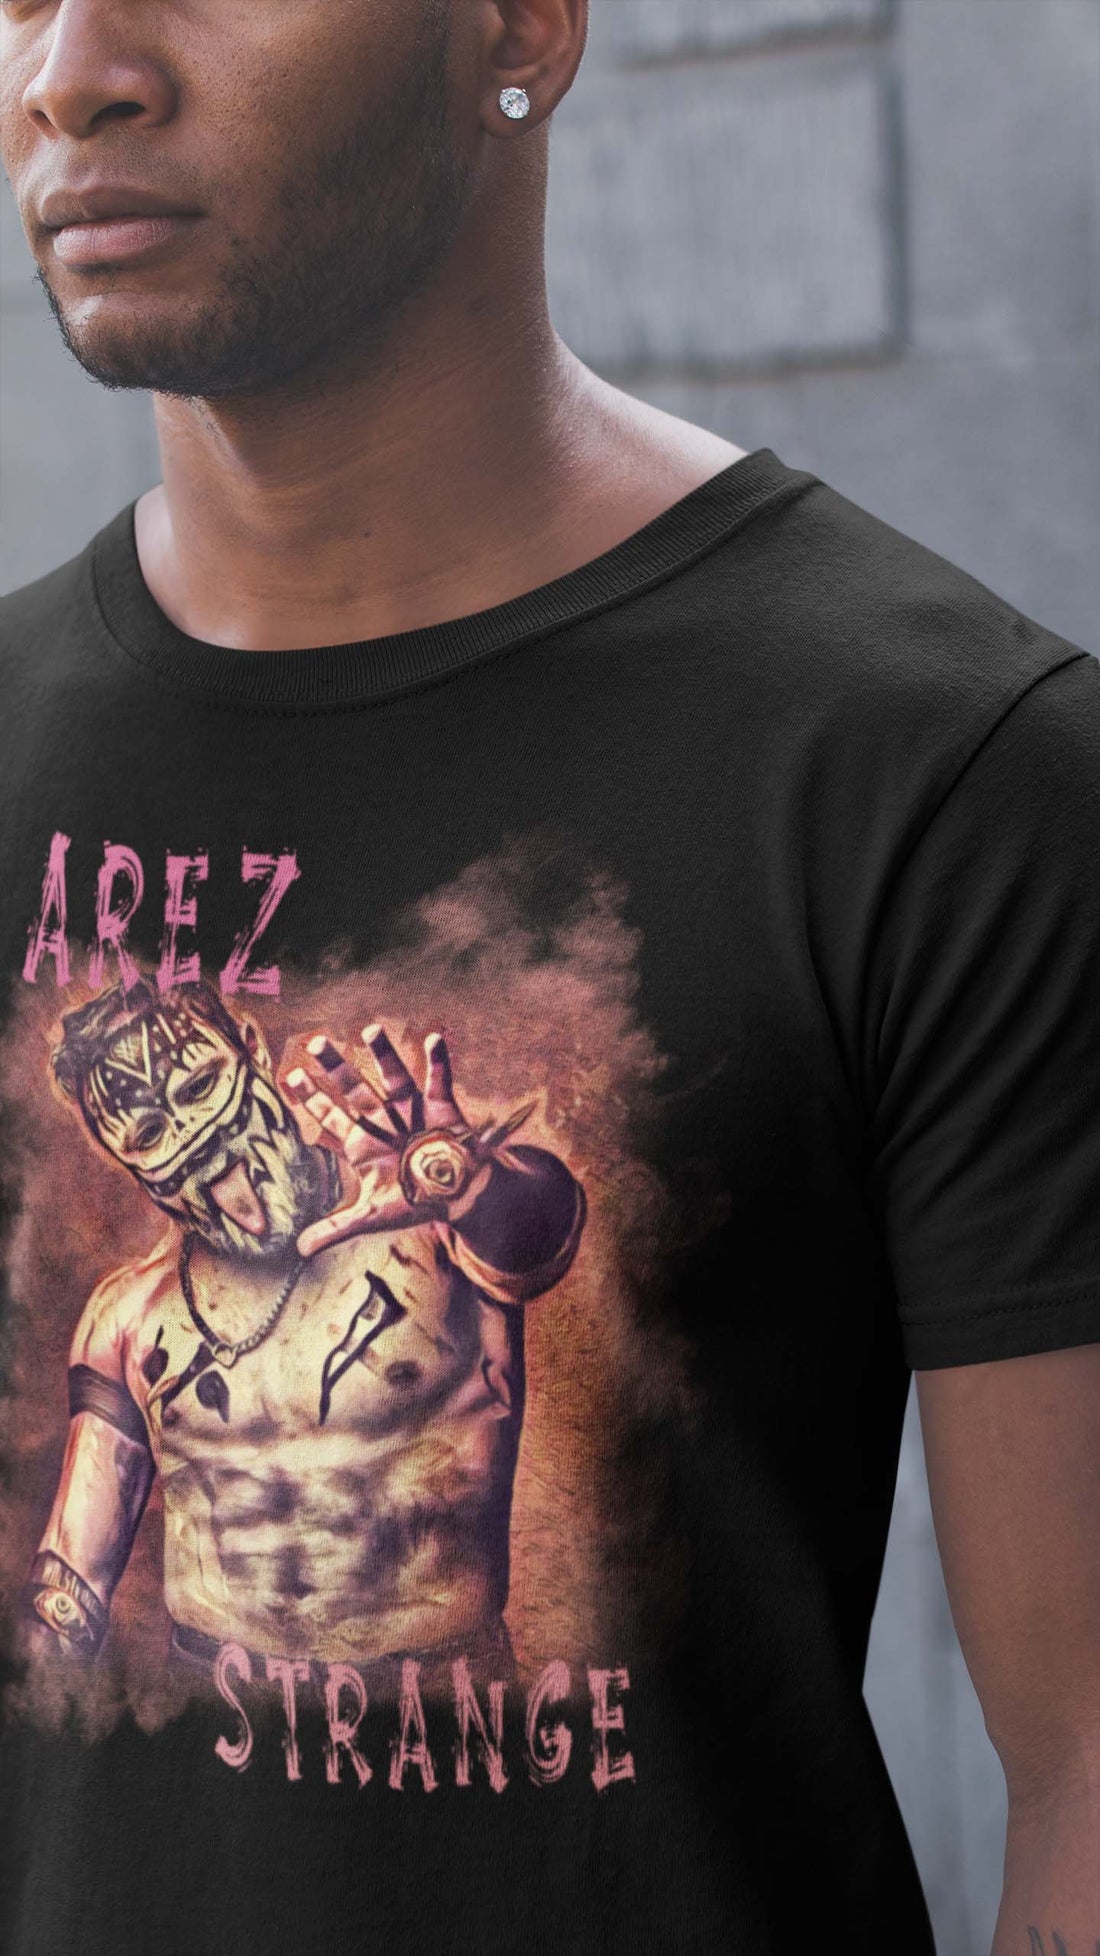 Arez Strange t-shirt